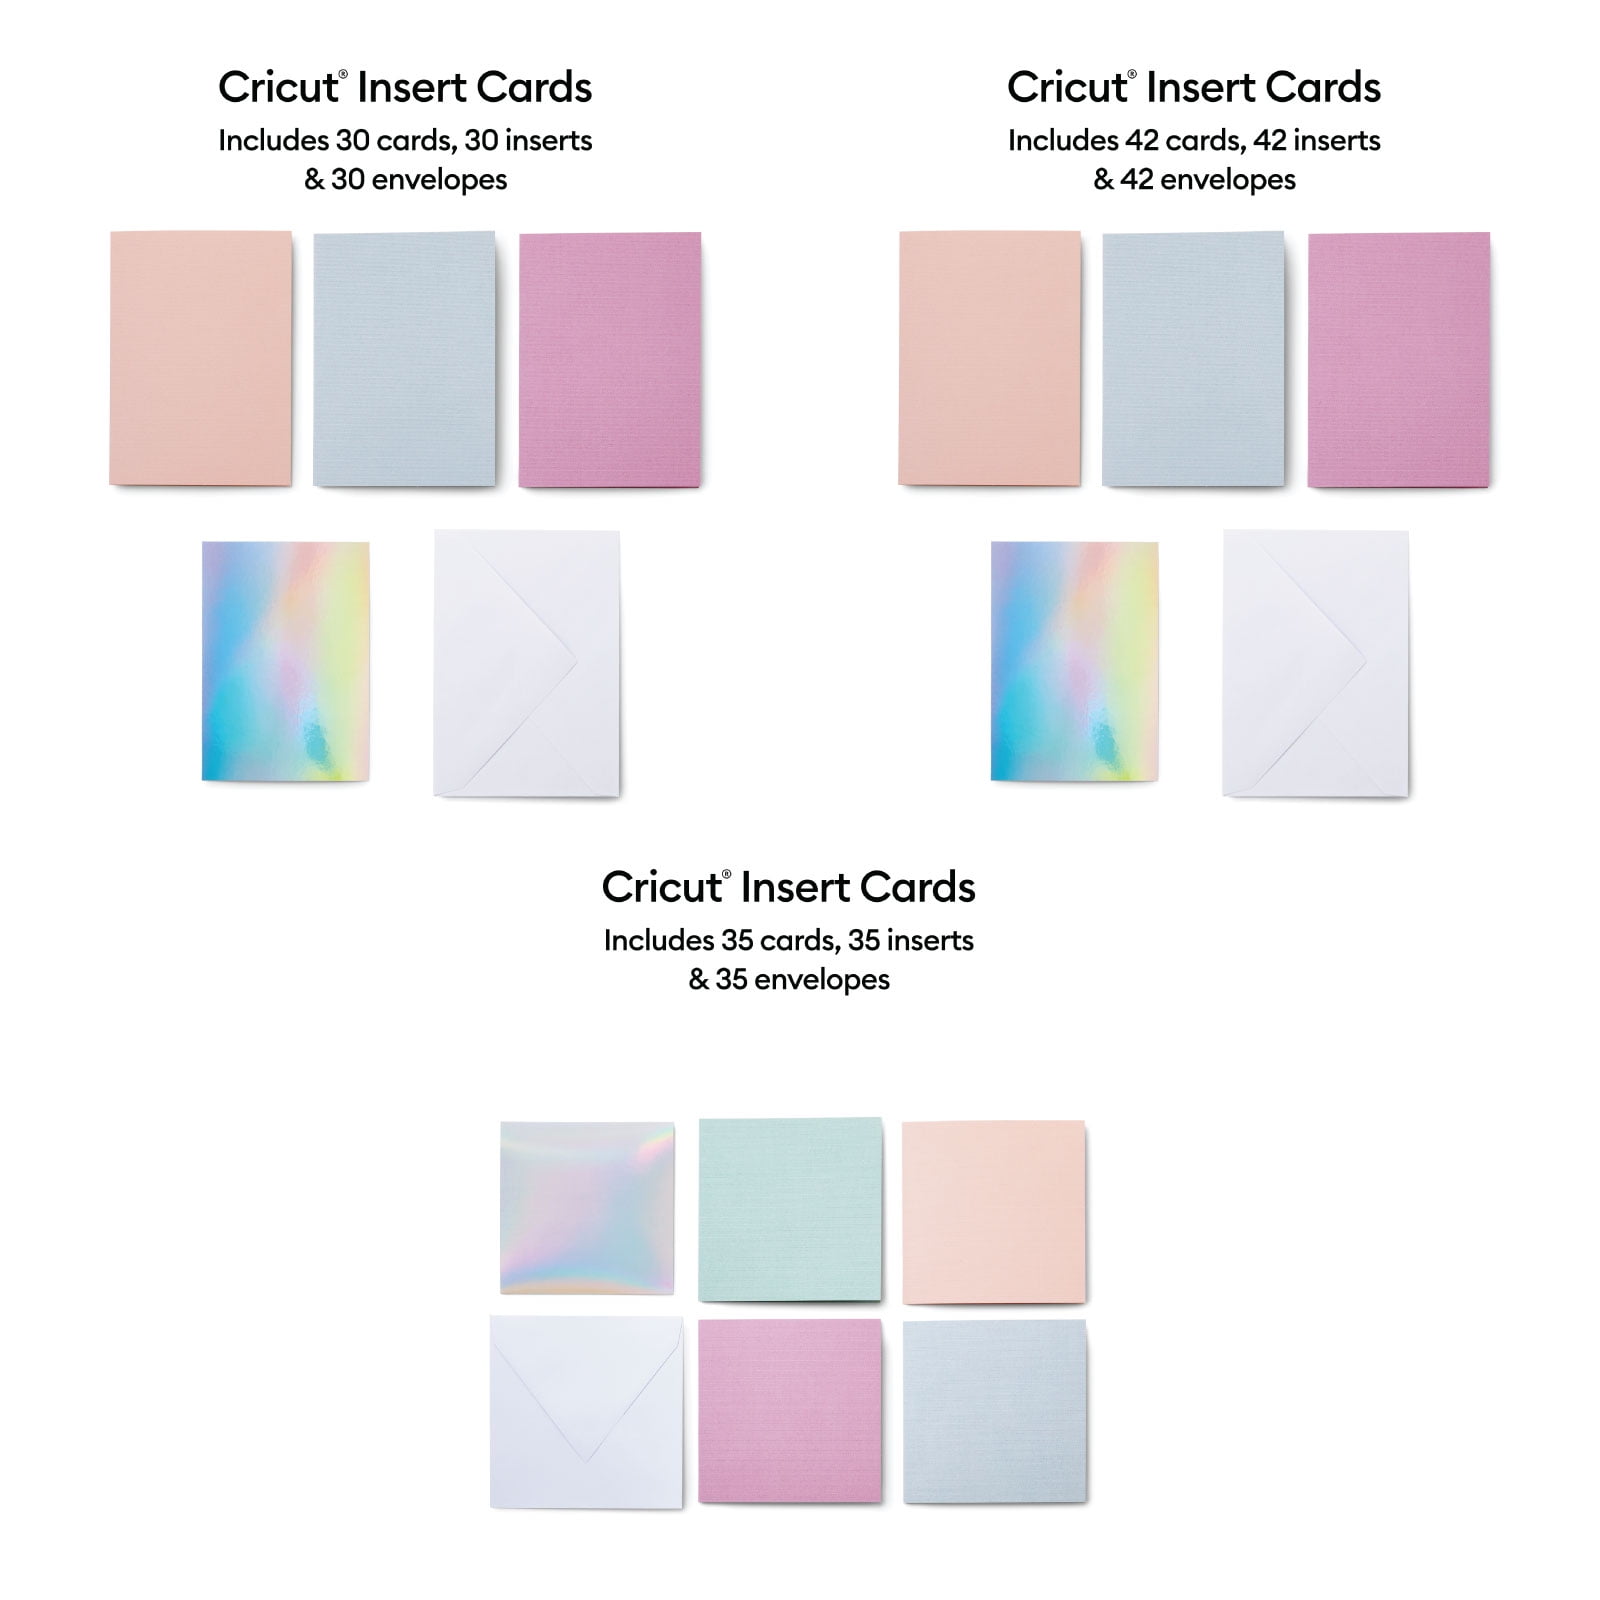 Cricut Cutaway Cards Double Pastel Sampler S40 Bundle